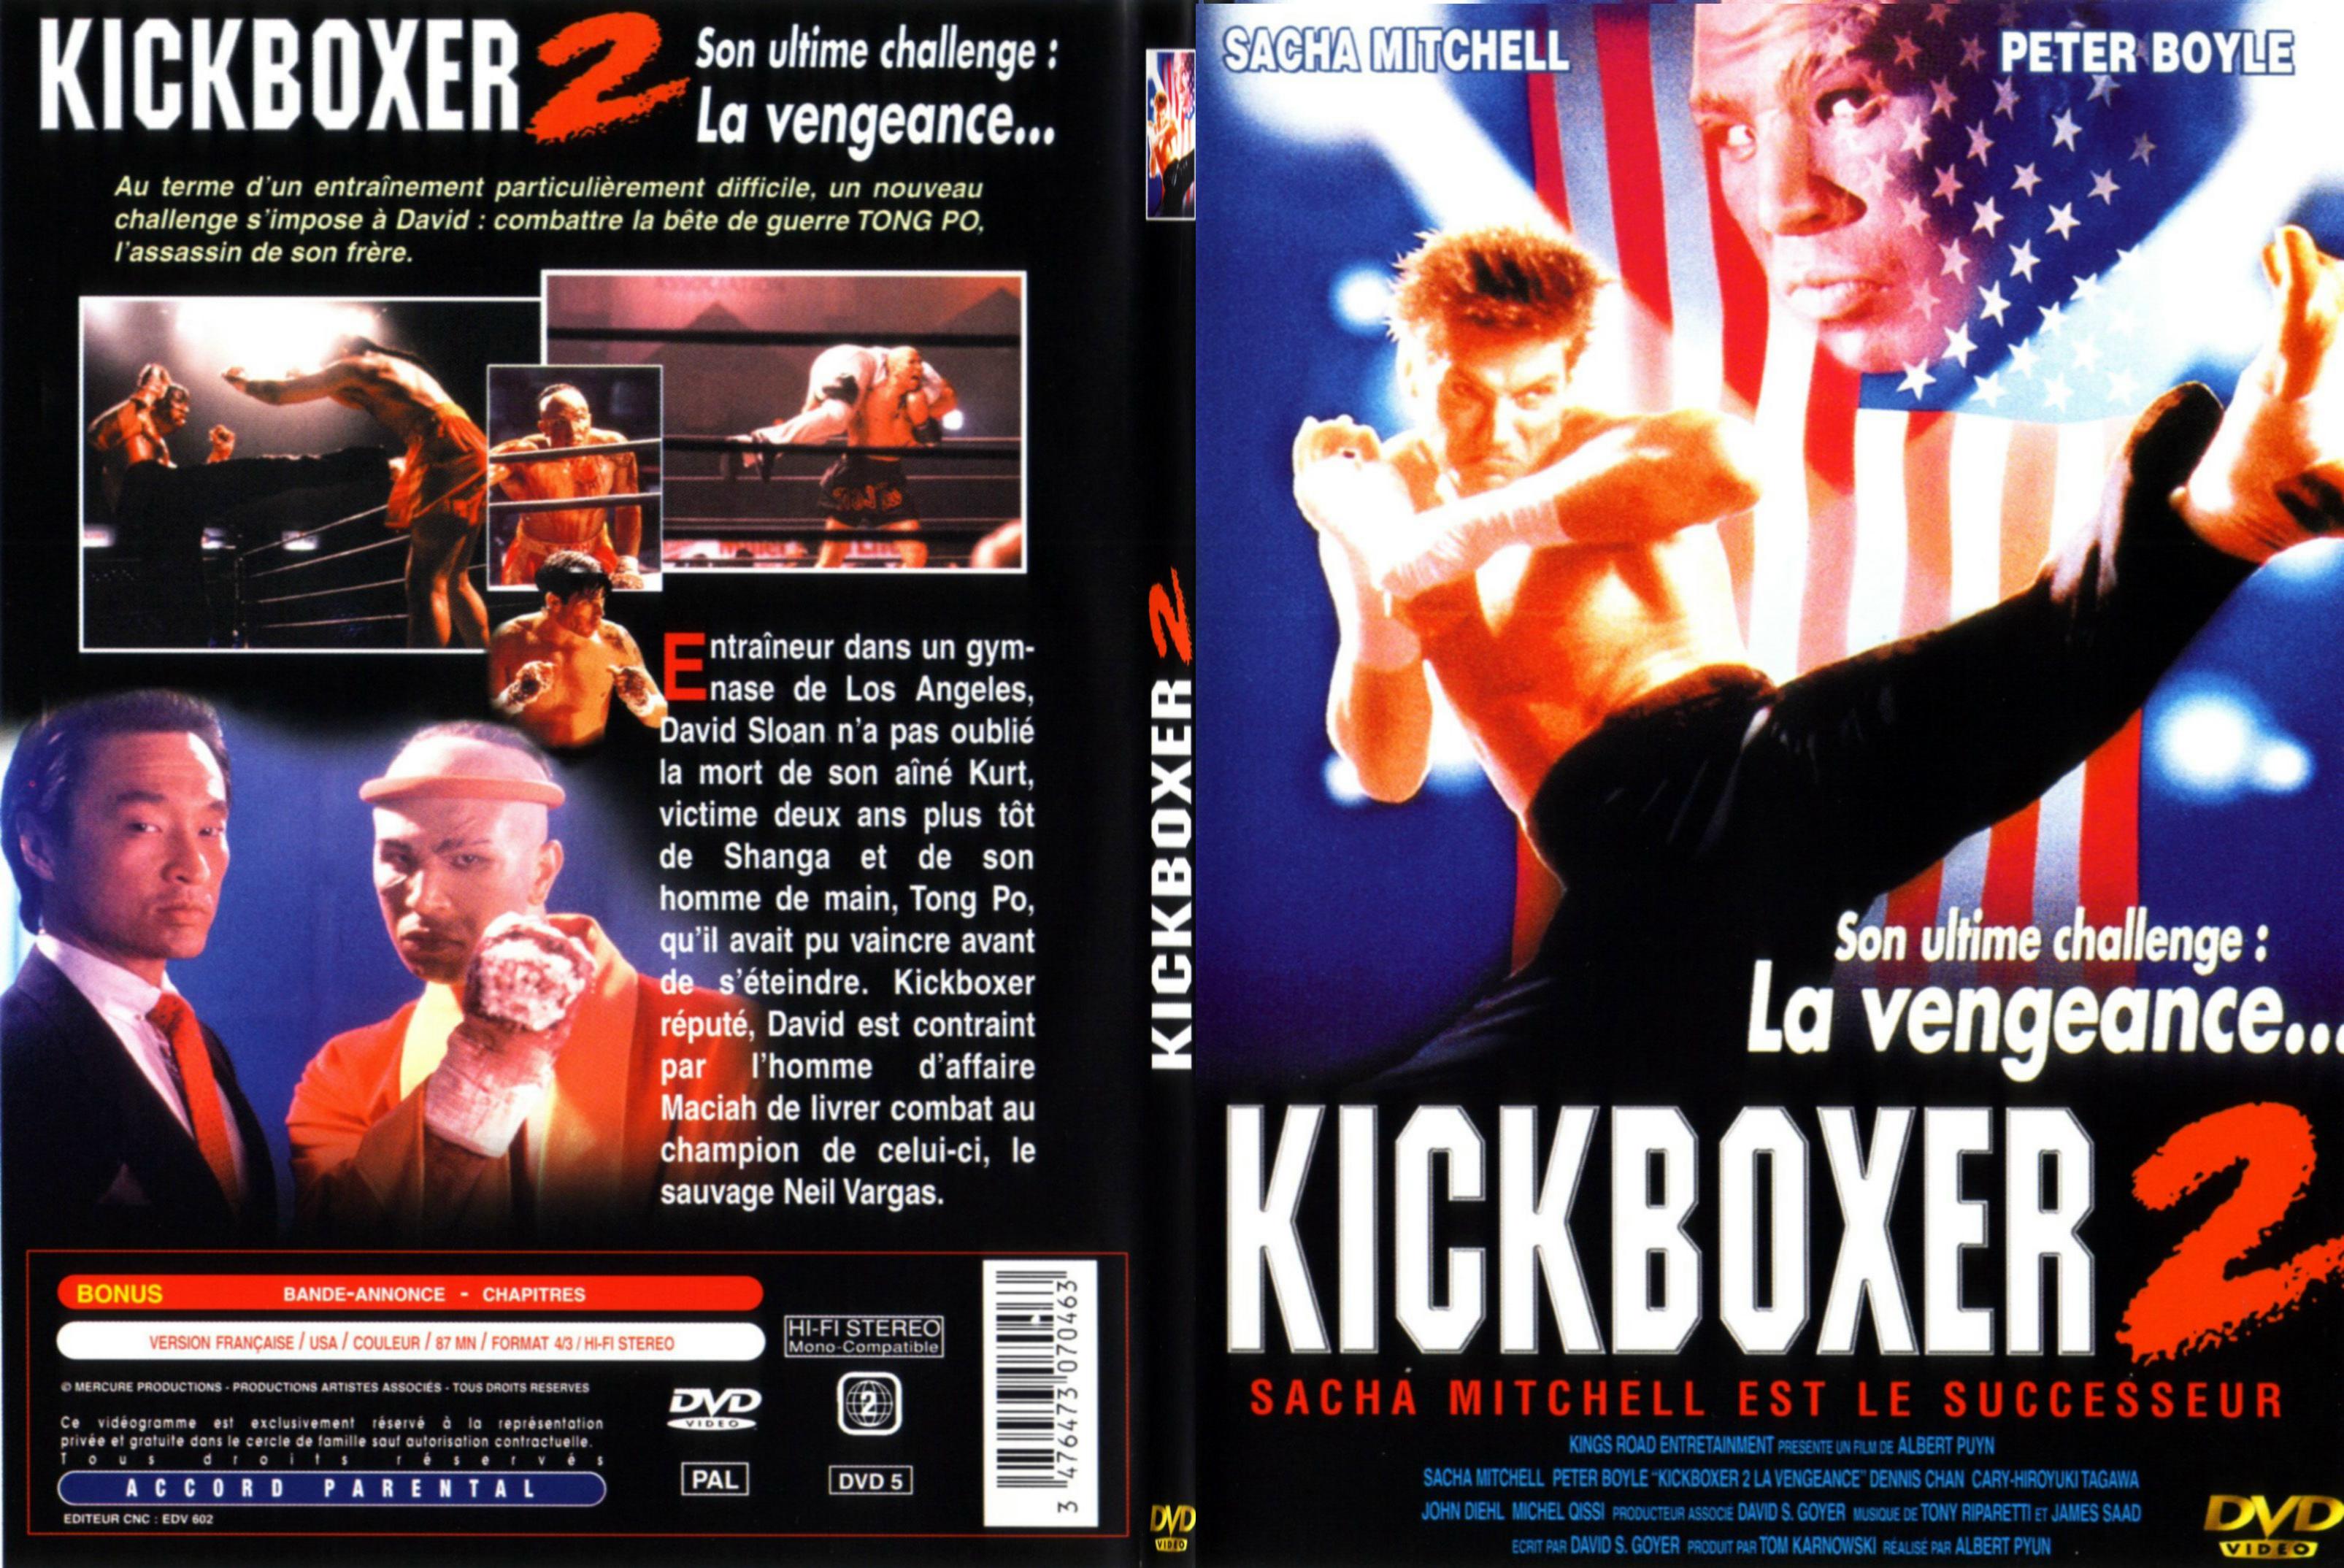 Jaquette DVD Kickboxer 2 - SLIM